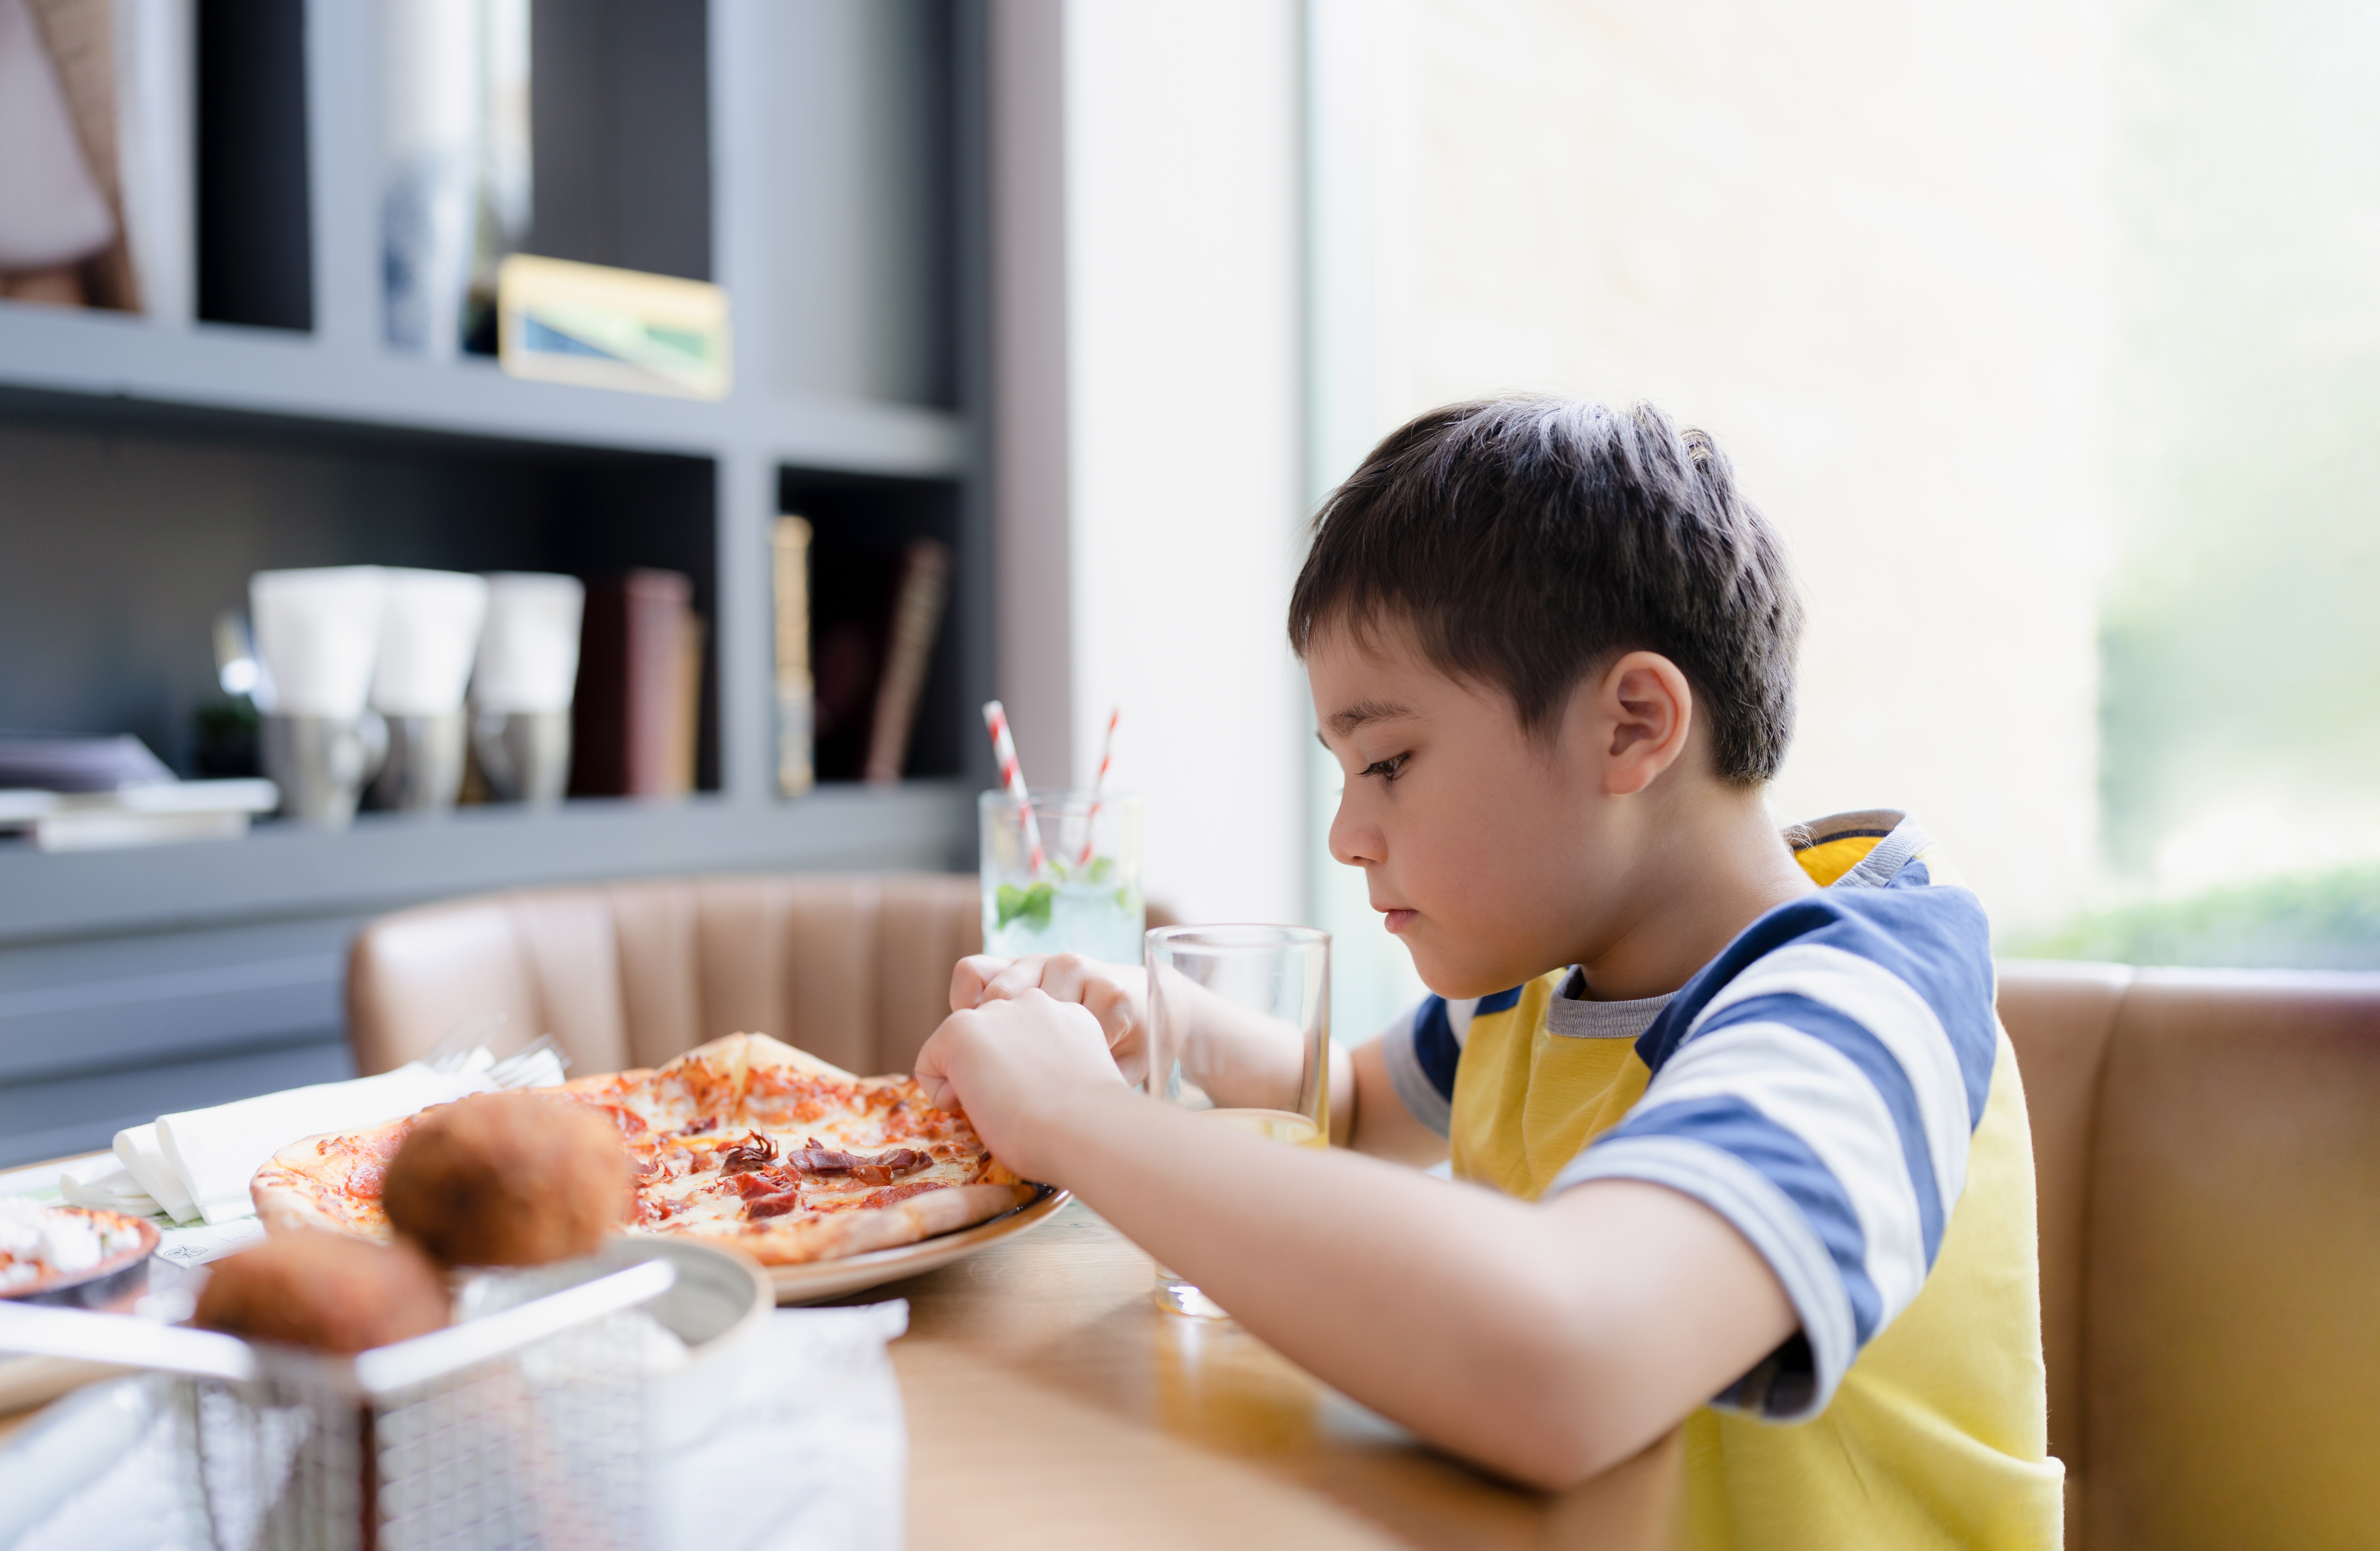 A boy having a meal | Source: Shutterstock